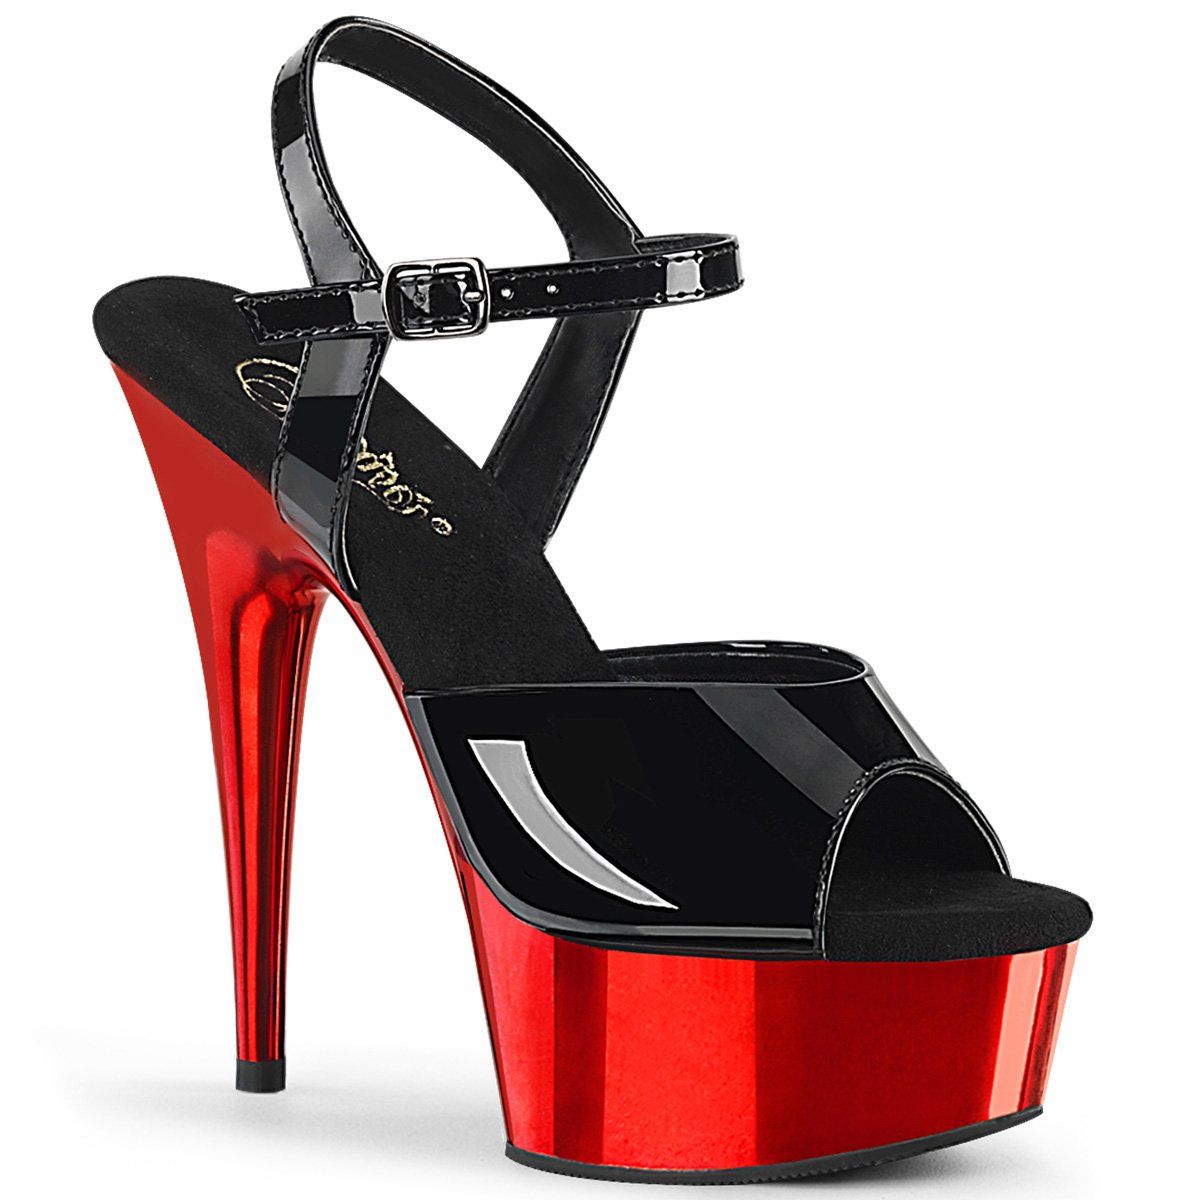 DELIGHT-609 Black Patent/Red Chrome Platform Sandal Pleaser